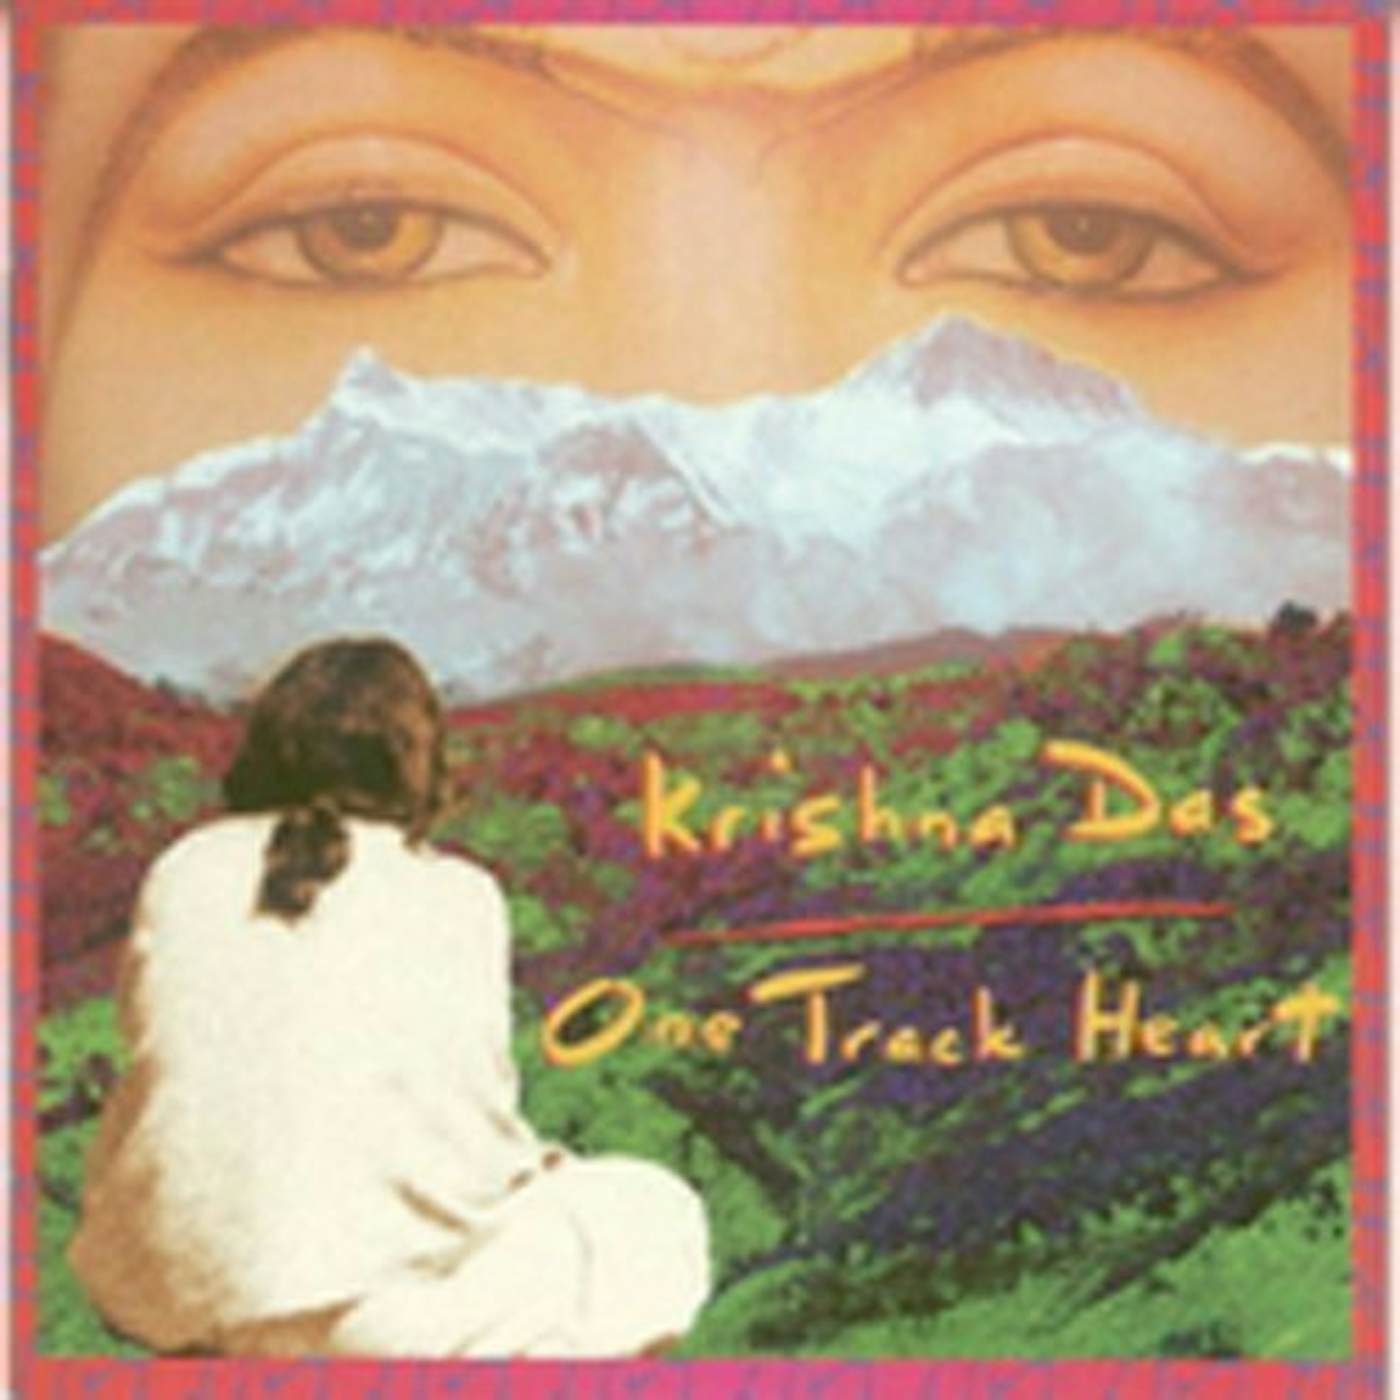 Krishna Das ONE TRACK HEART CD